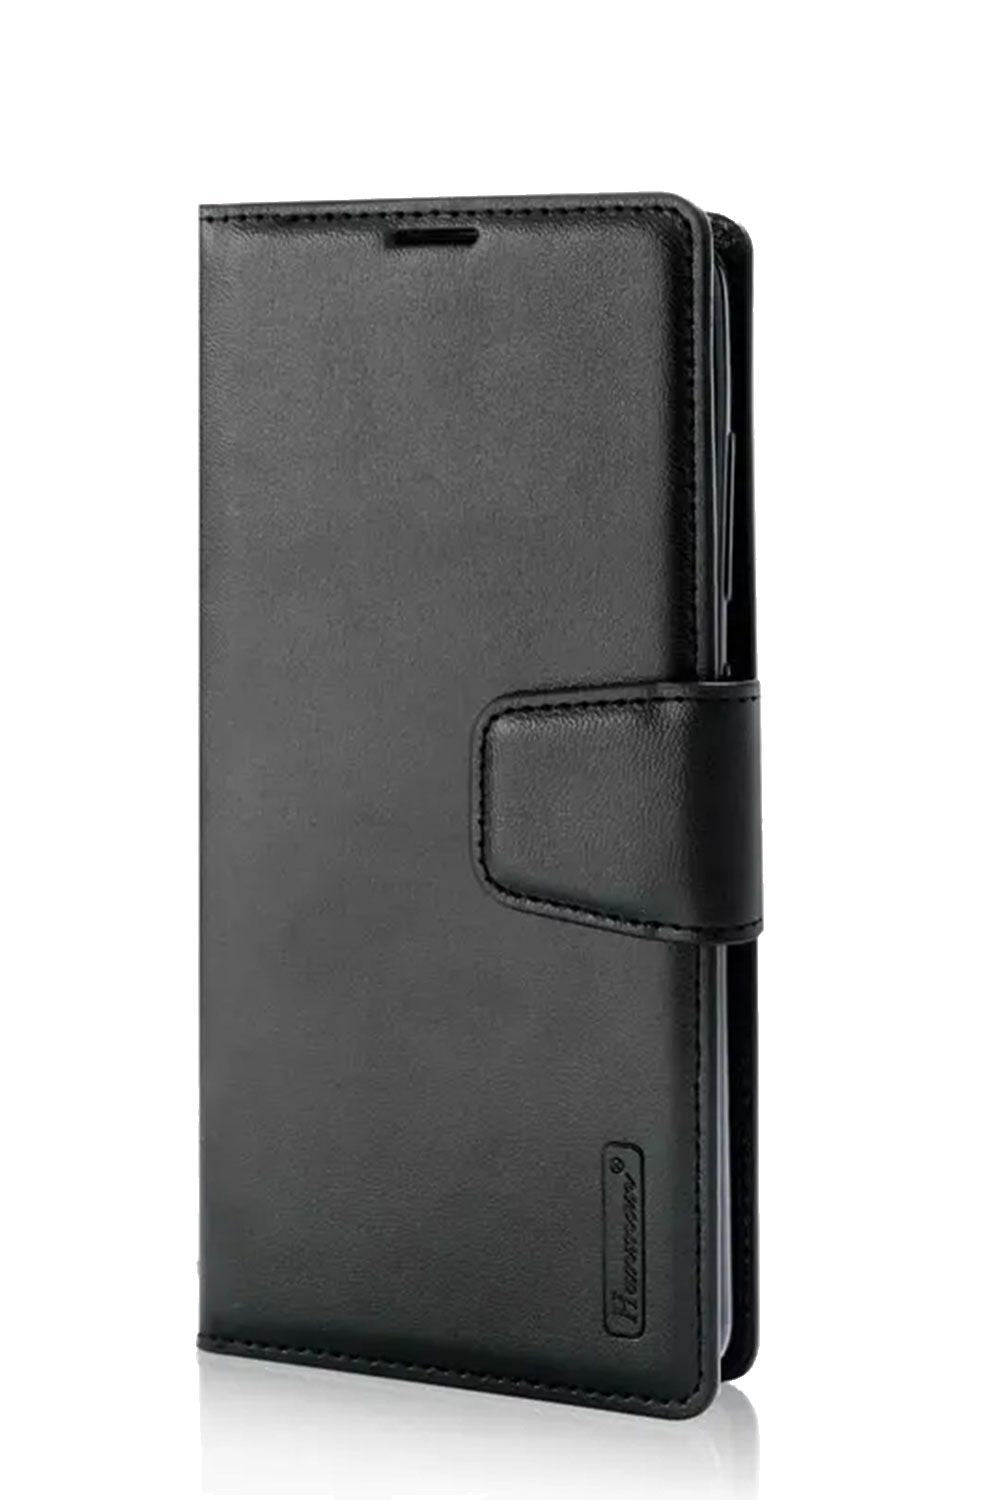 Hanman Samsung Galaxy S21 FE Premium Leather Wallet Flip Case with Card Slots